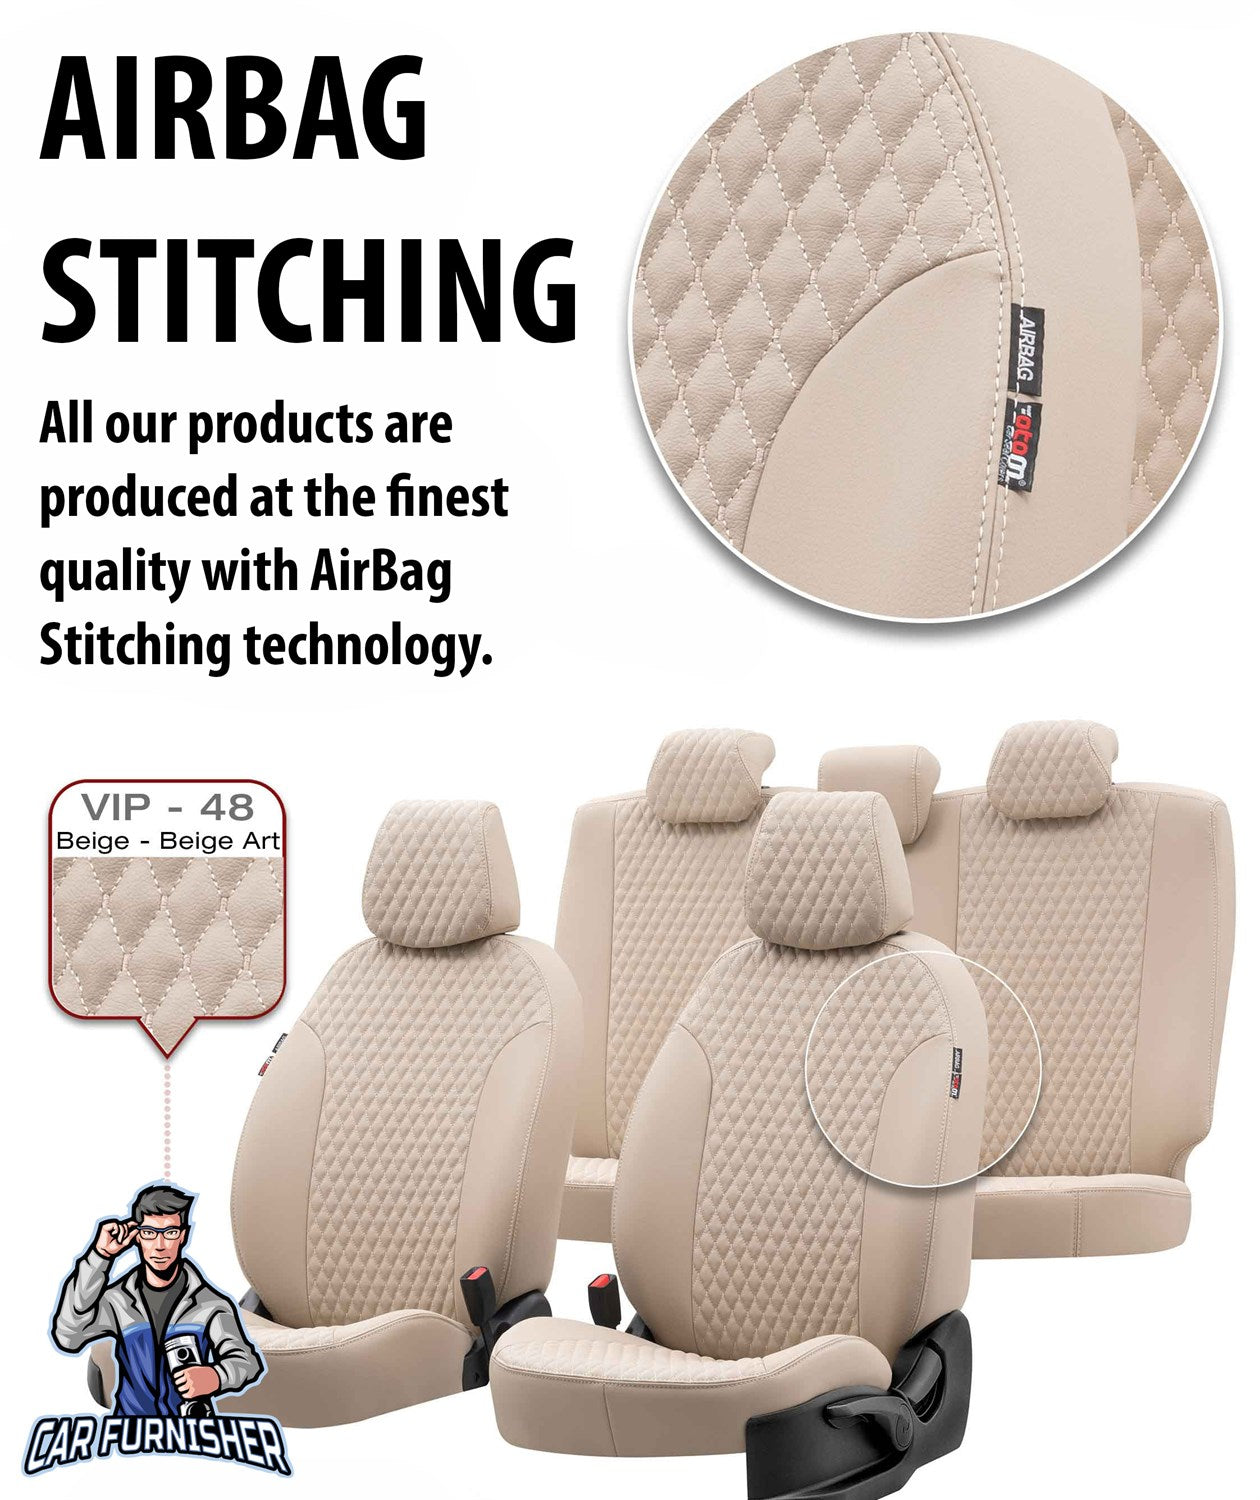 Fiat Brava Seat Covers Amsterdam Leather Design Smoked Black Leather